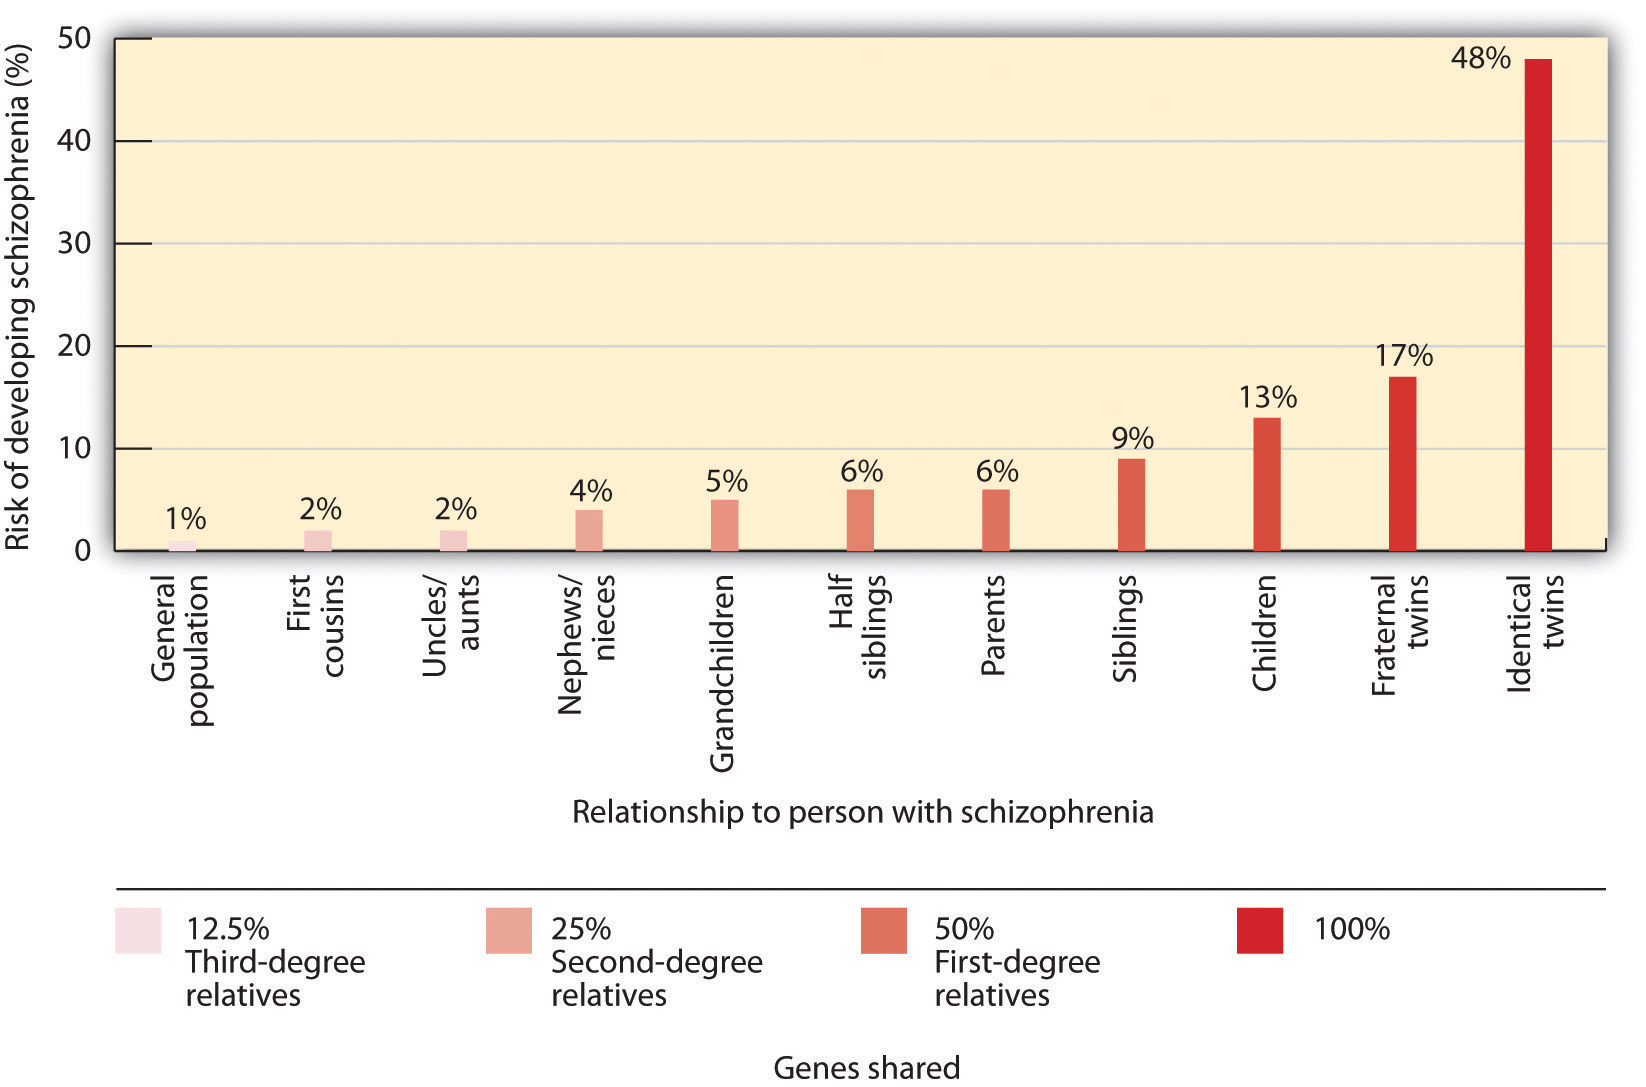 Genetic Disposition to Develop Schizophrenia. Long description available.